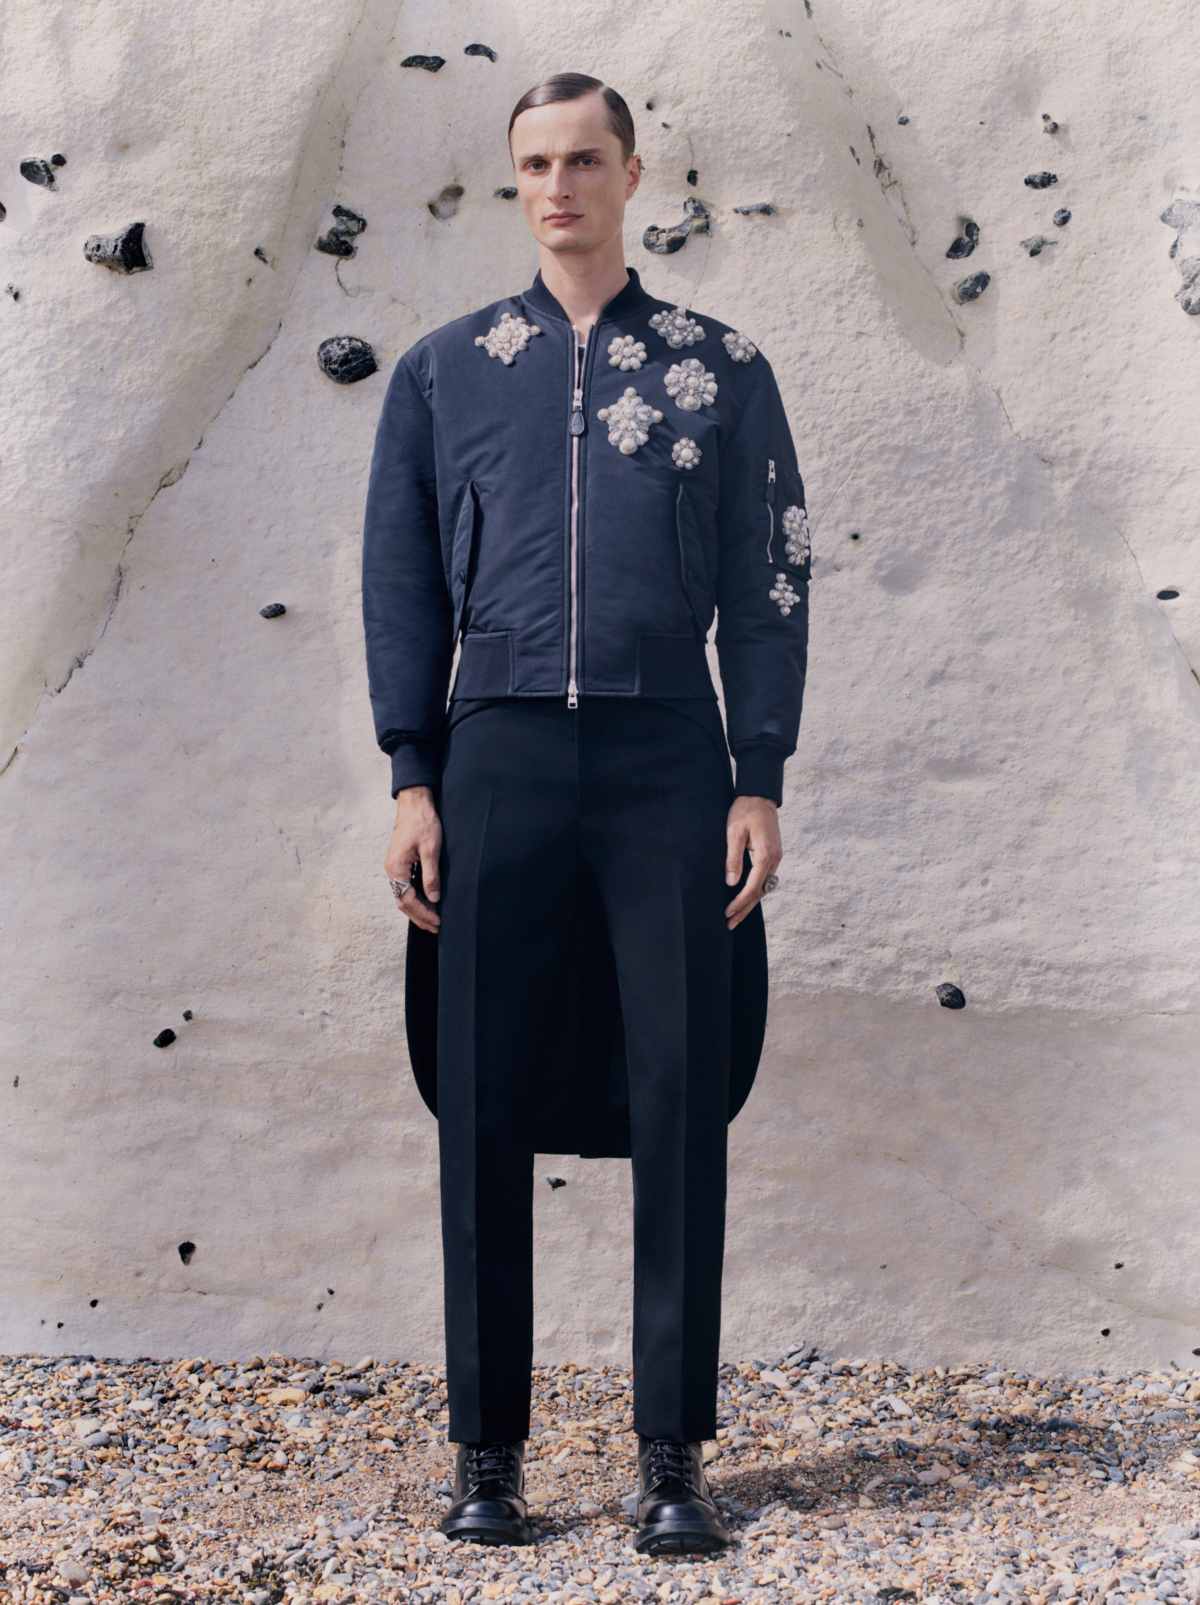 Alexander McQueen: Menswear Spring/Summer 2021